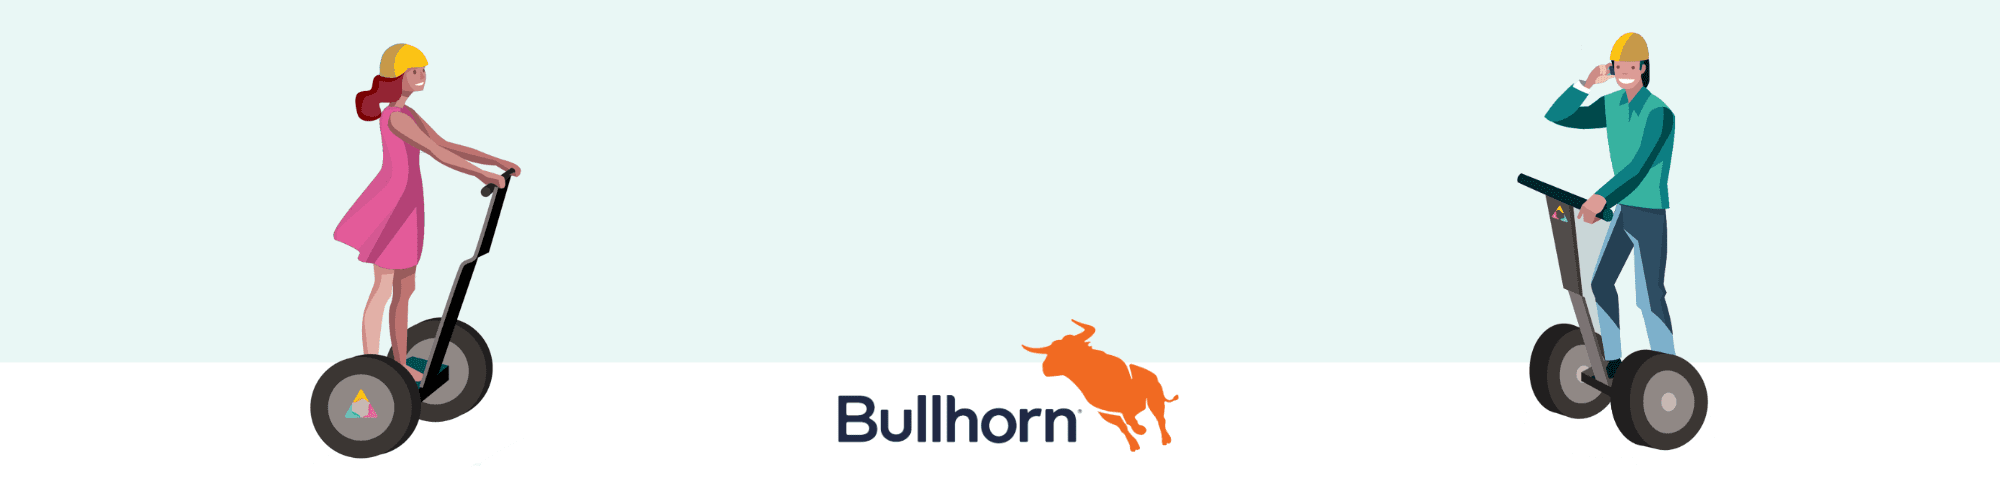 bullhorn-crm-training-bullhorn-hacks-banner